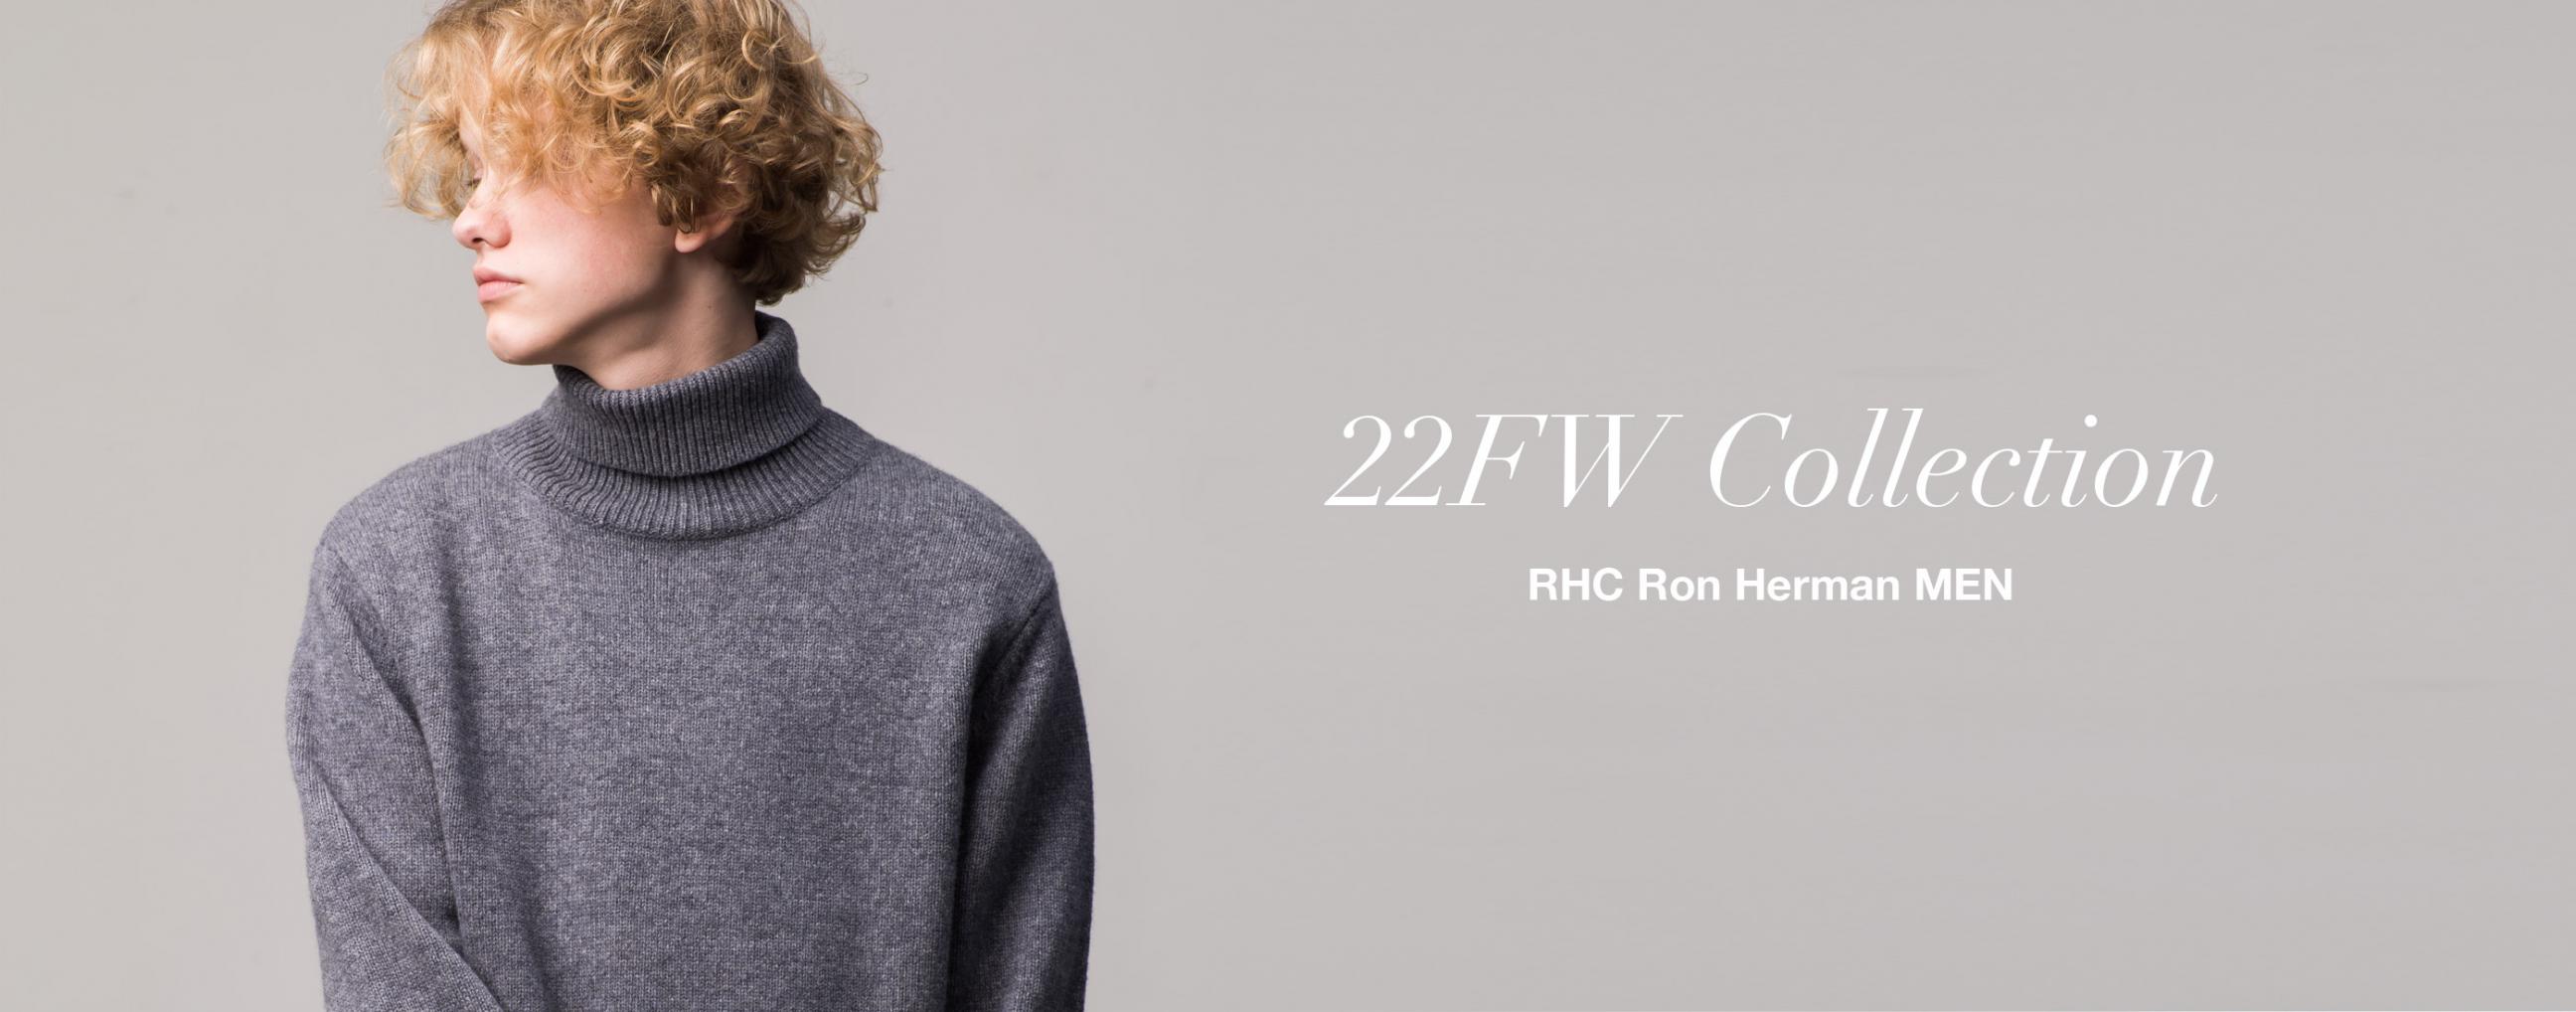 RHC ronherman official site